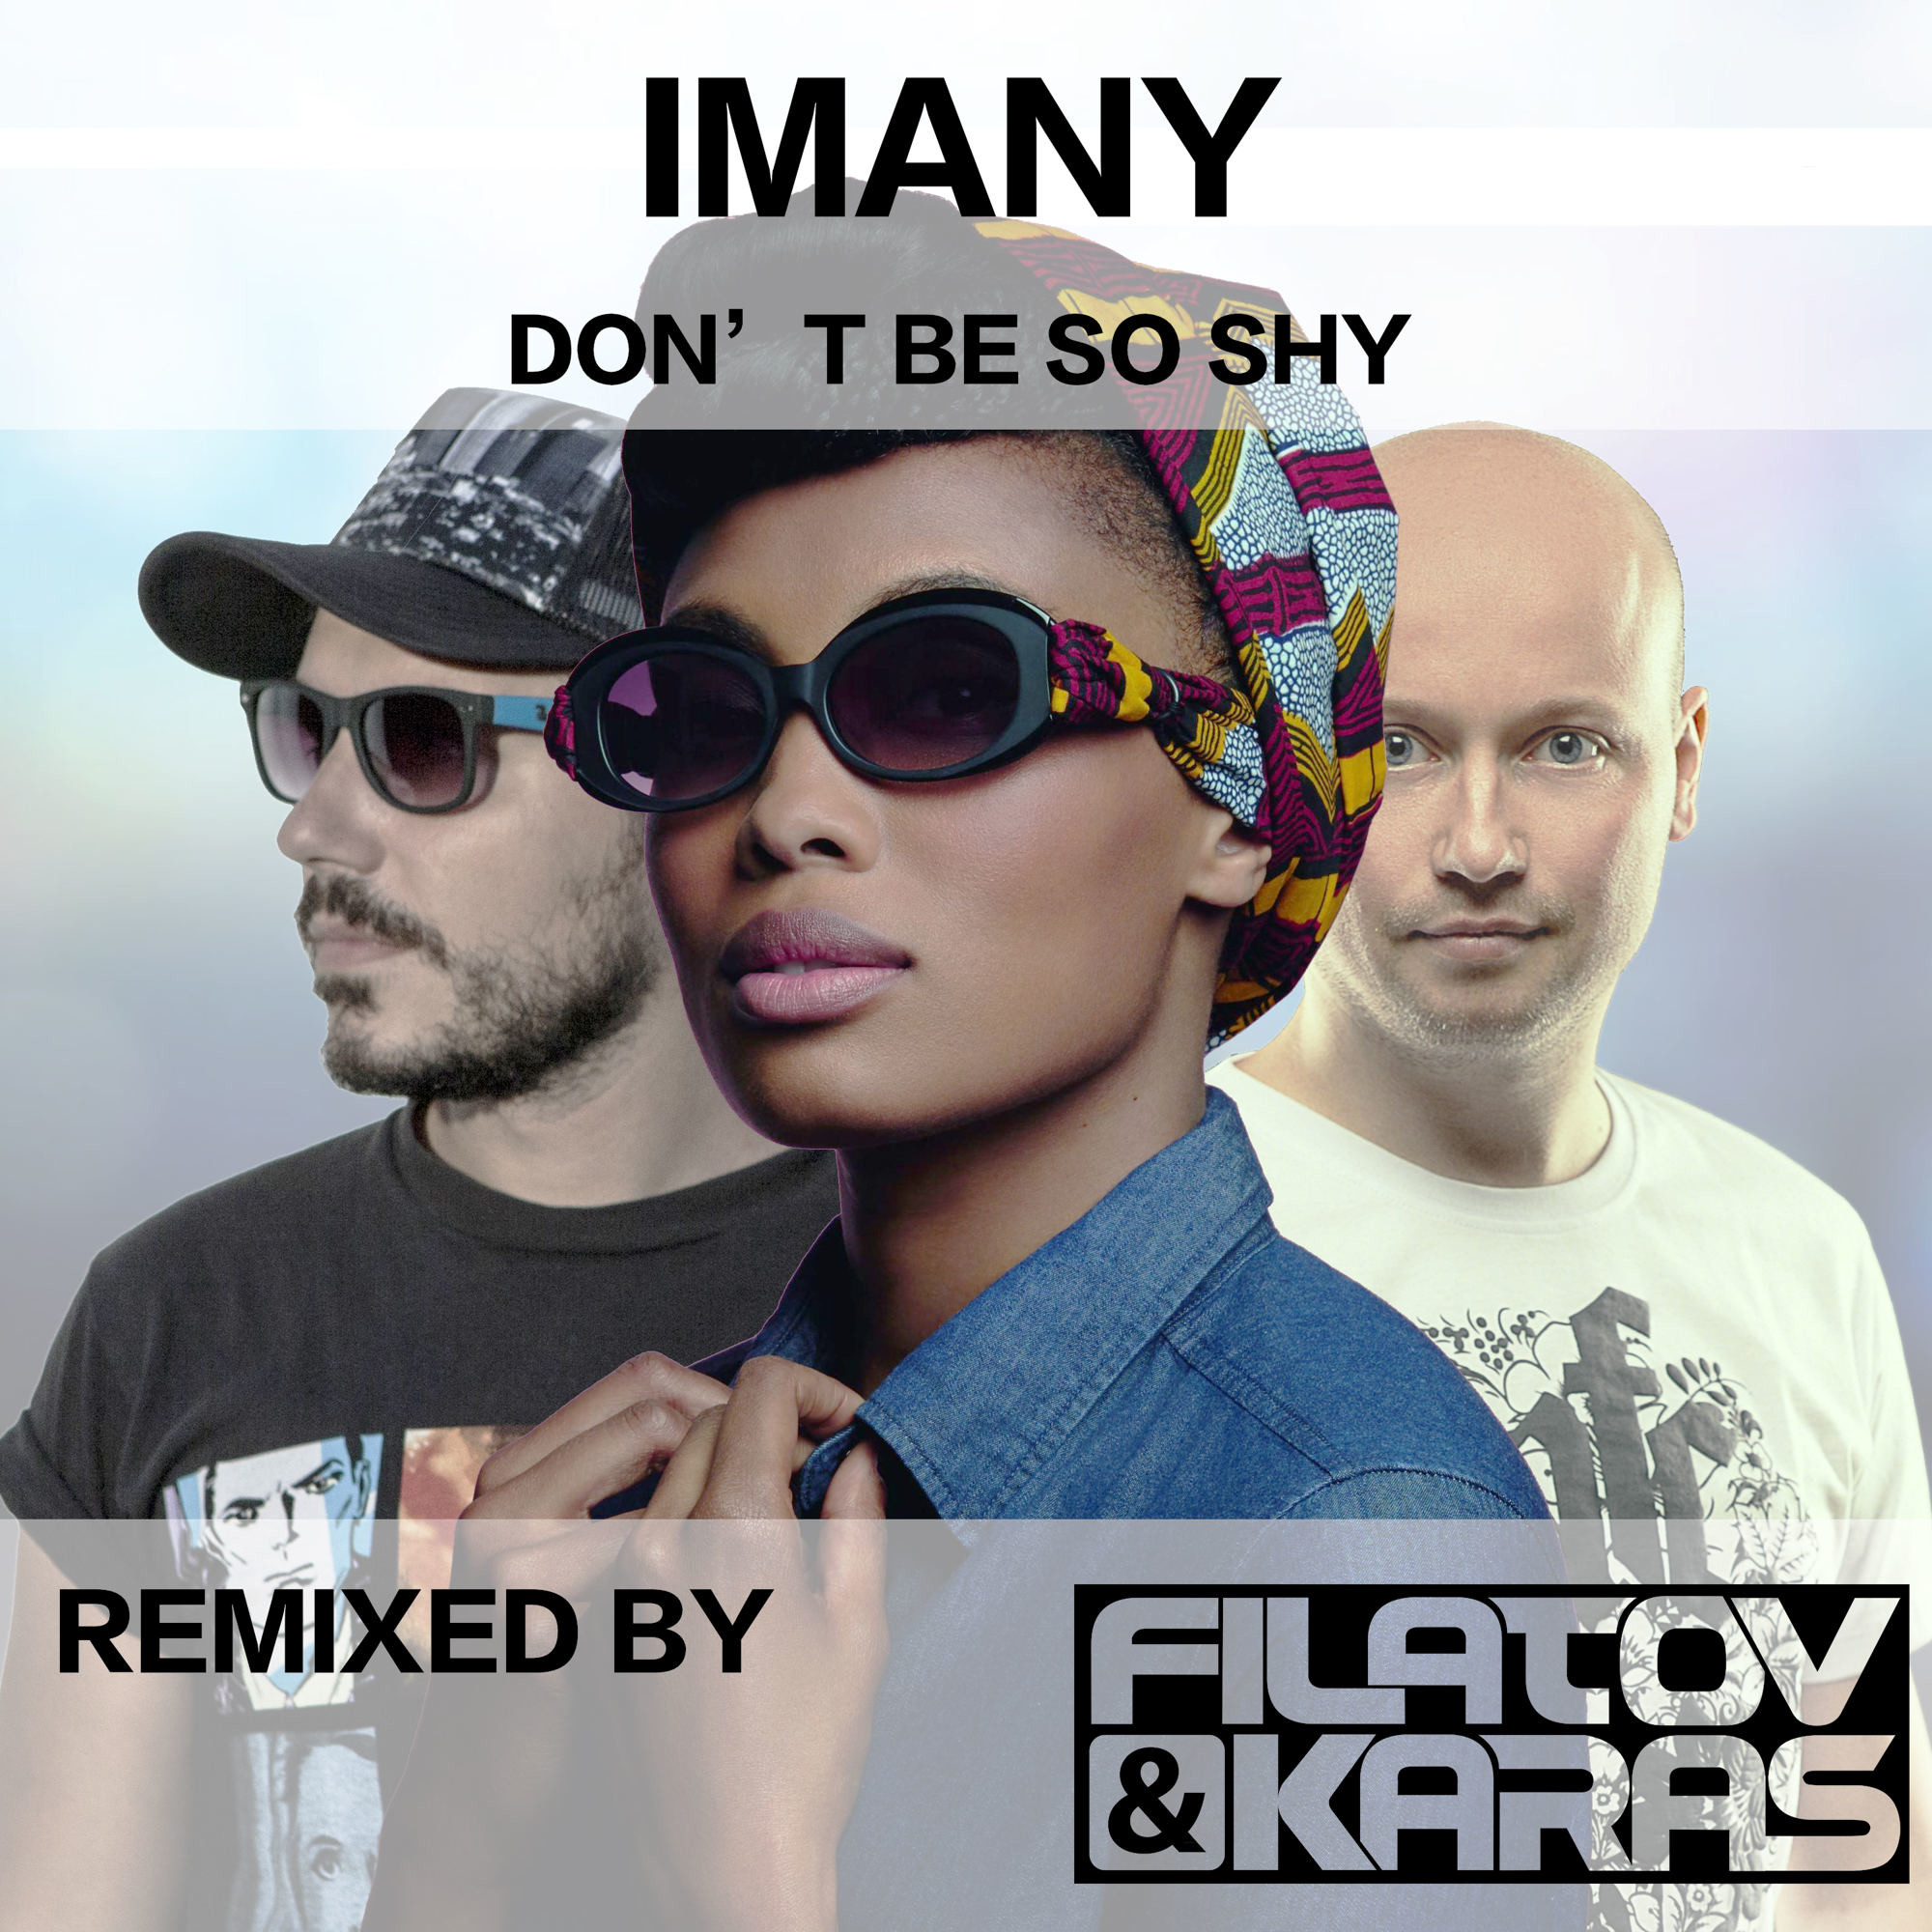 Don't Be So Shy (Filatov & Karas Remix)